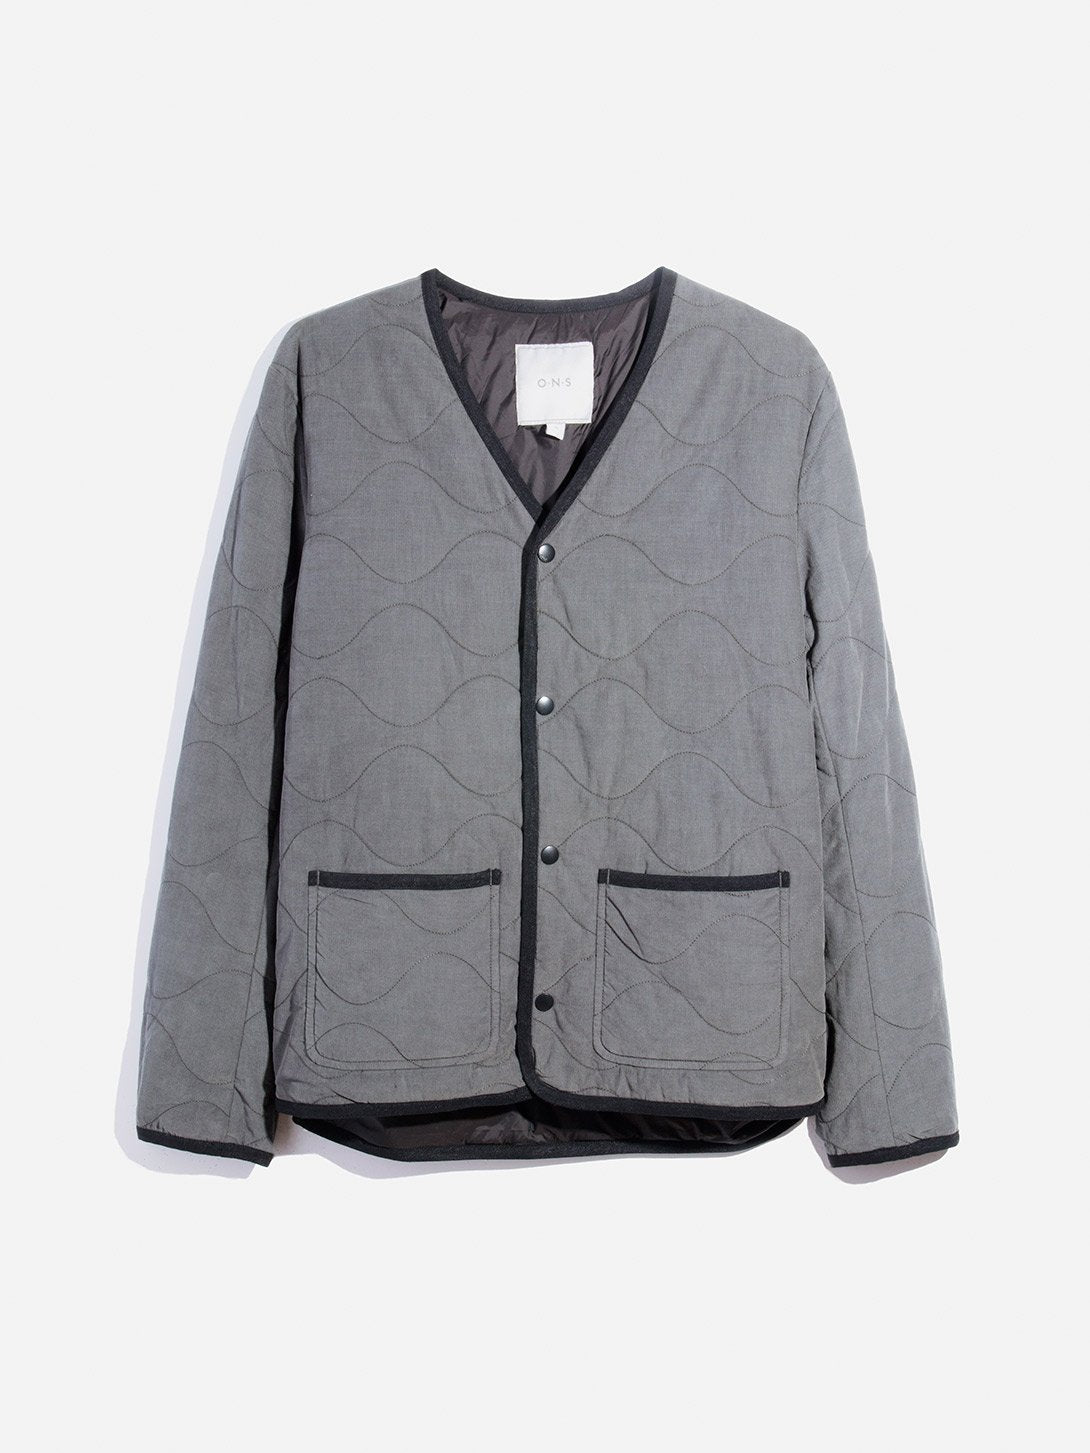 DARK SHADOW GREY jacket for men crescent jacket ONS clothing